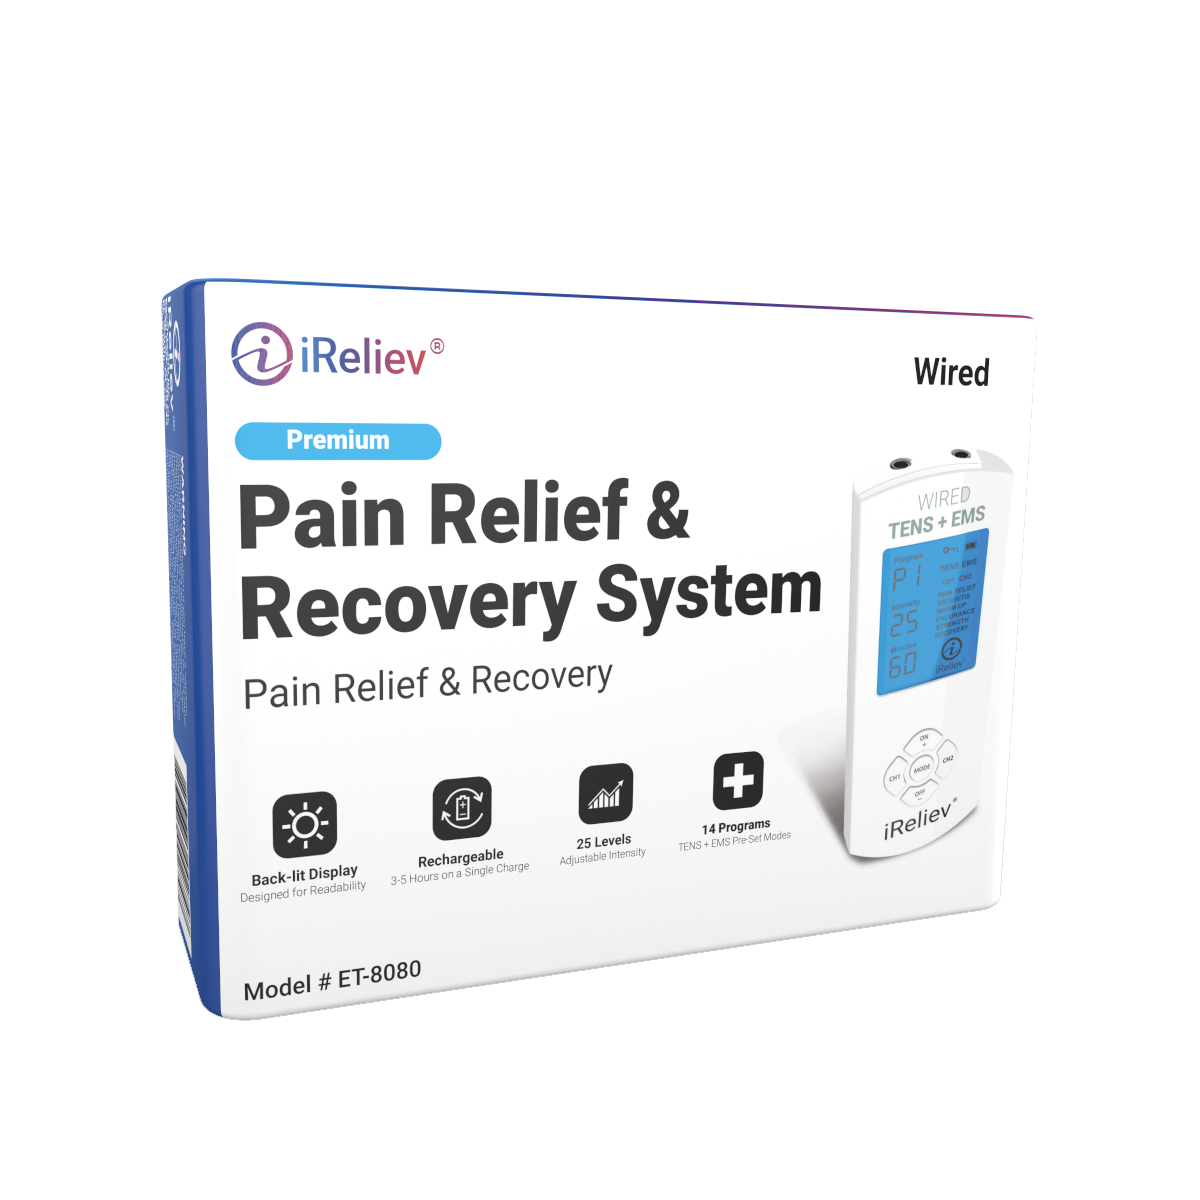 TENS Unit Pain Relief System